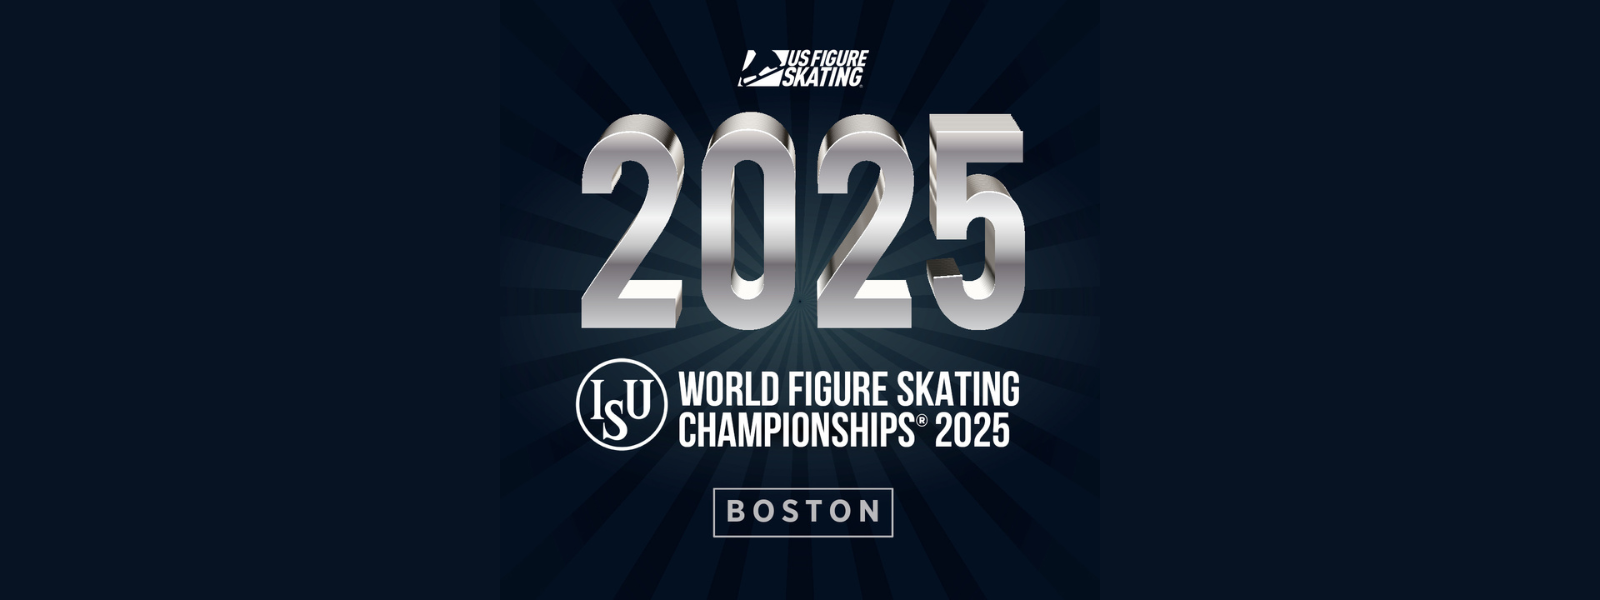 U S Figure Skating To Host ISU World Figure Skating Championships 2025 In Boston TD Garden